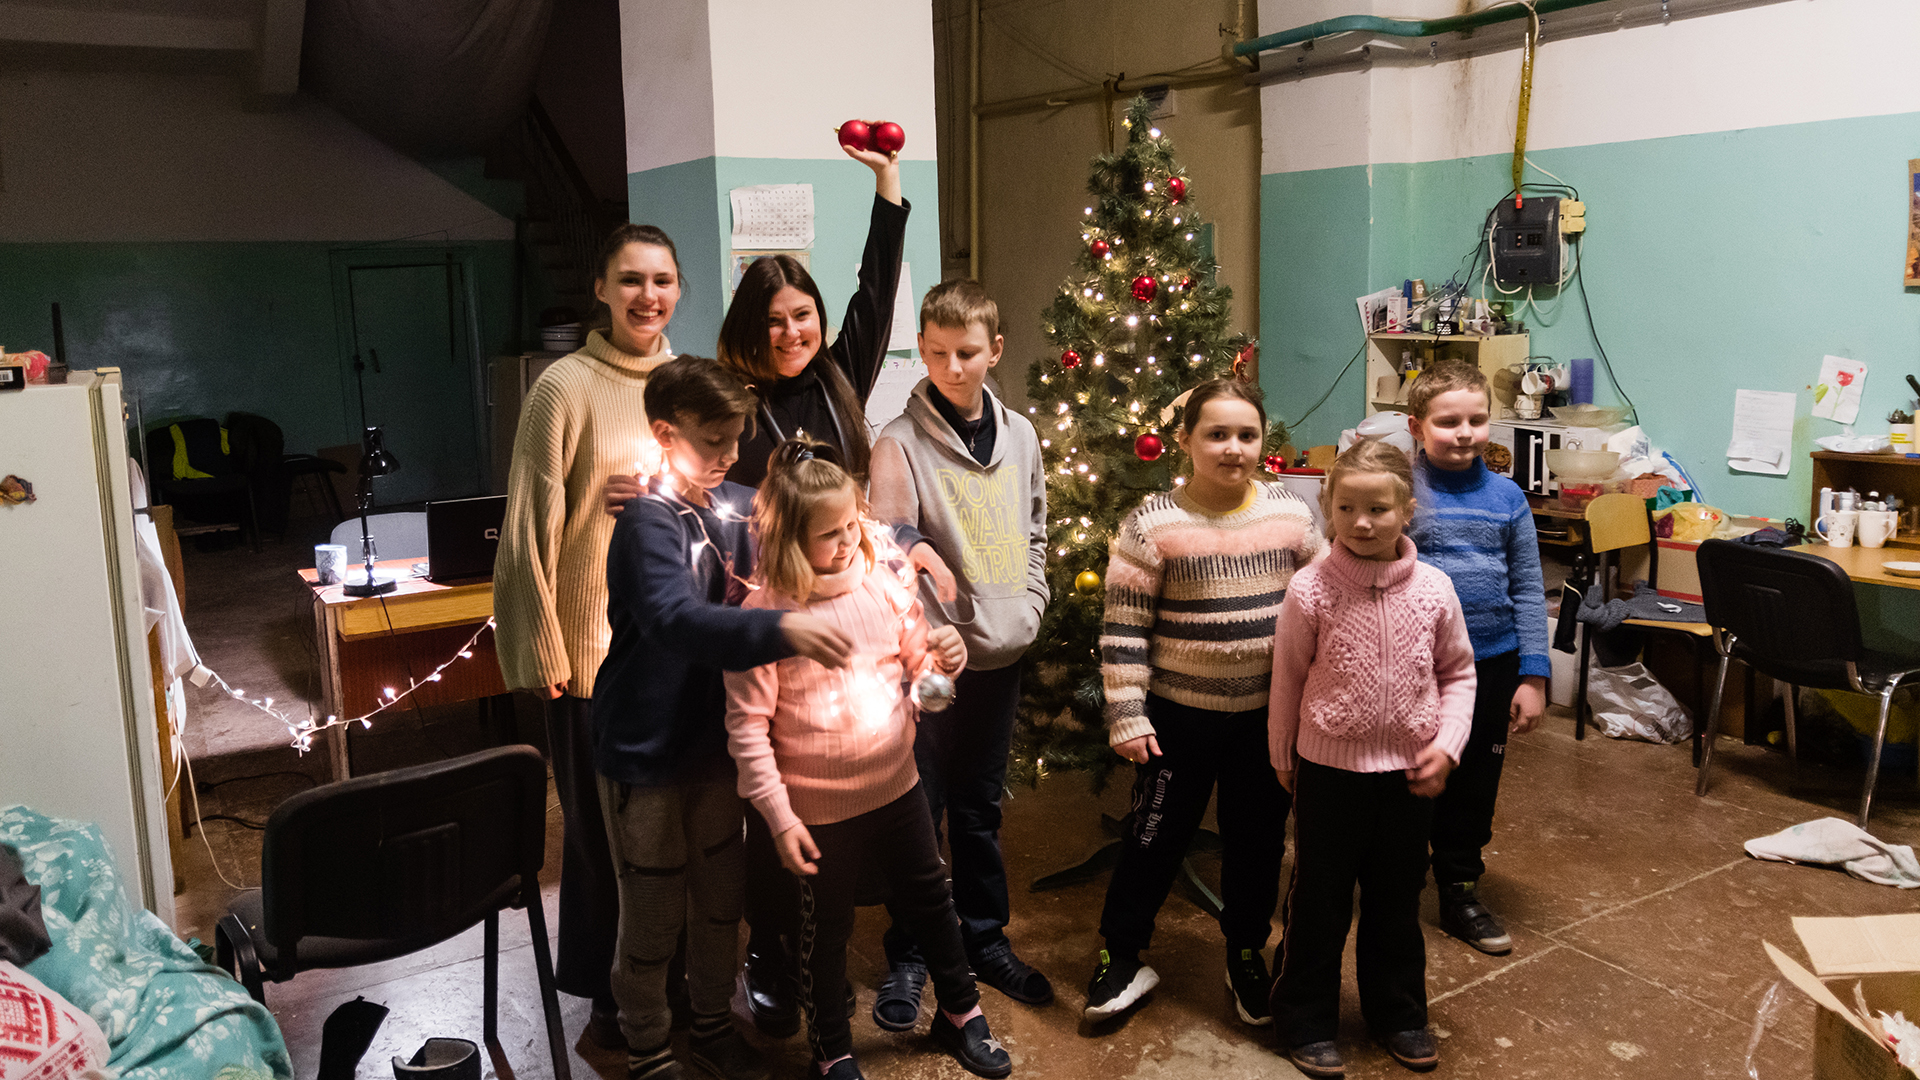 Families get festive in their Ukraine bunker